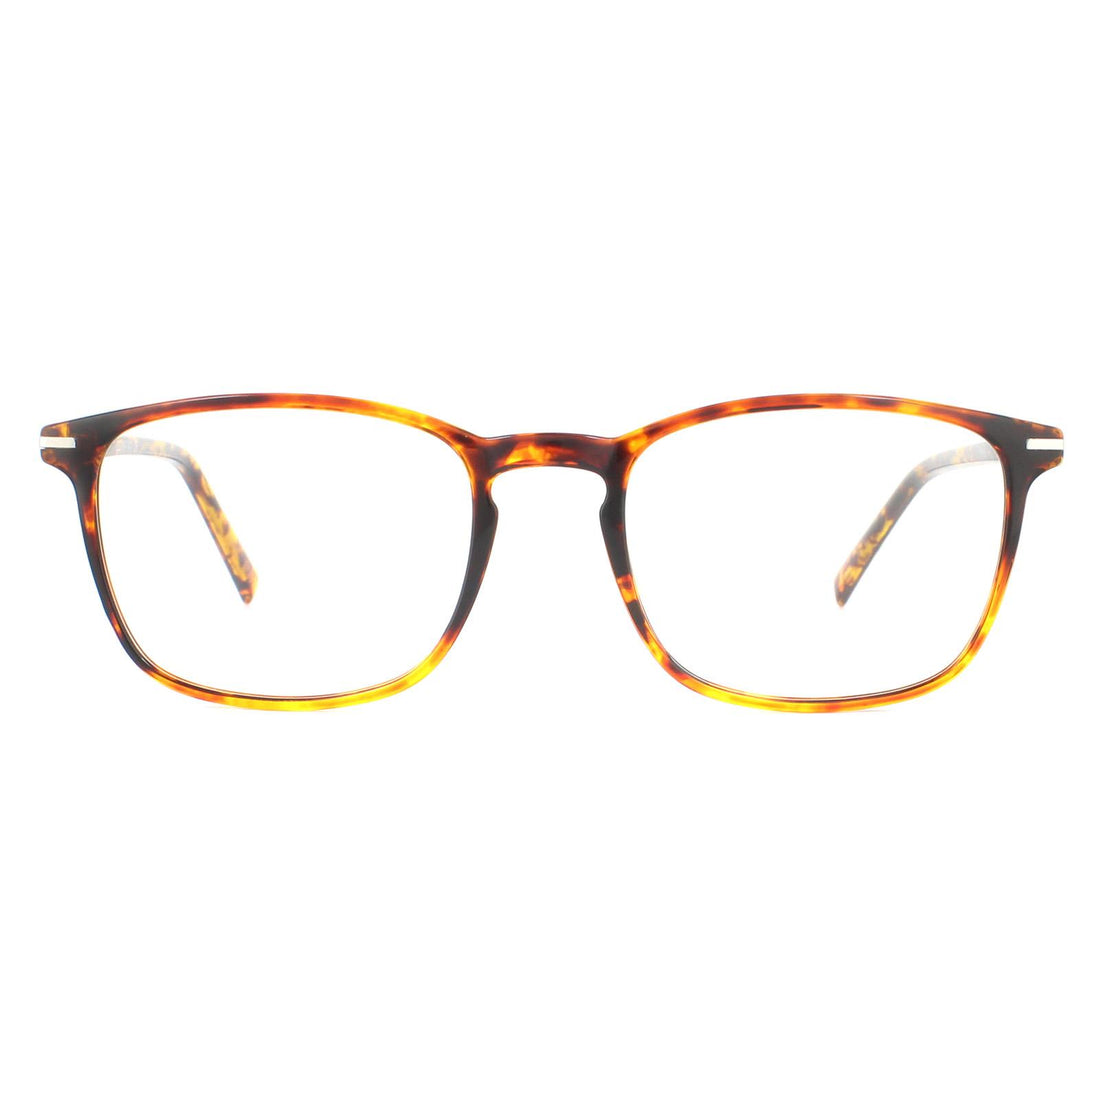 SunOptic AC9 Glasses Frames Turtle Brown